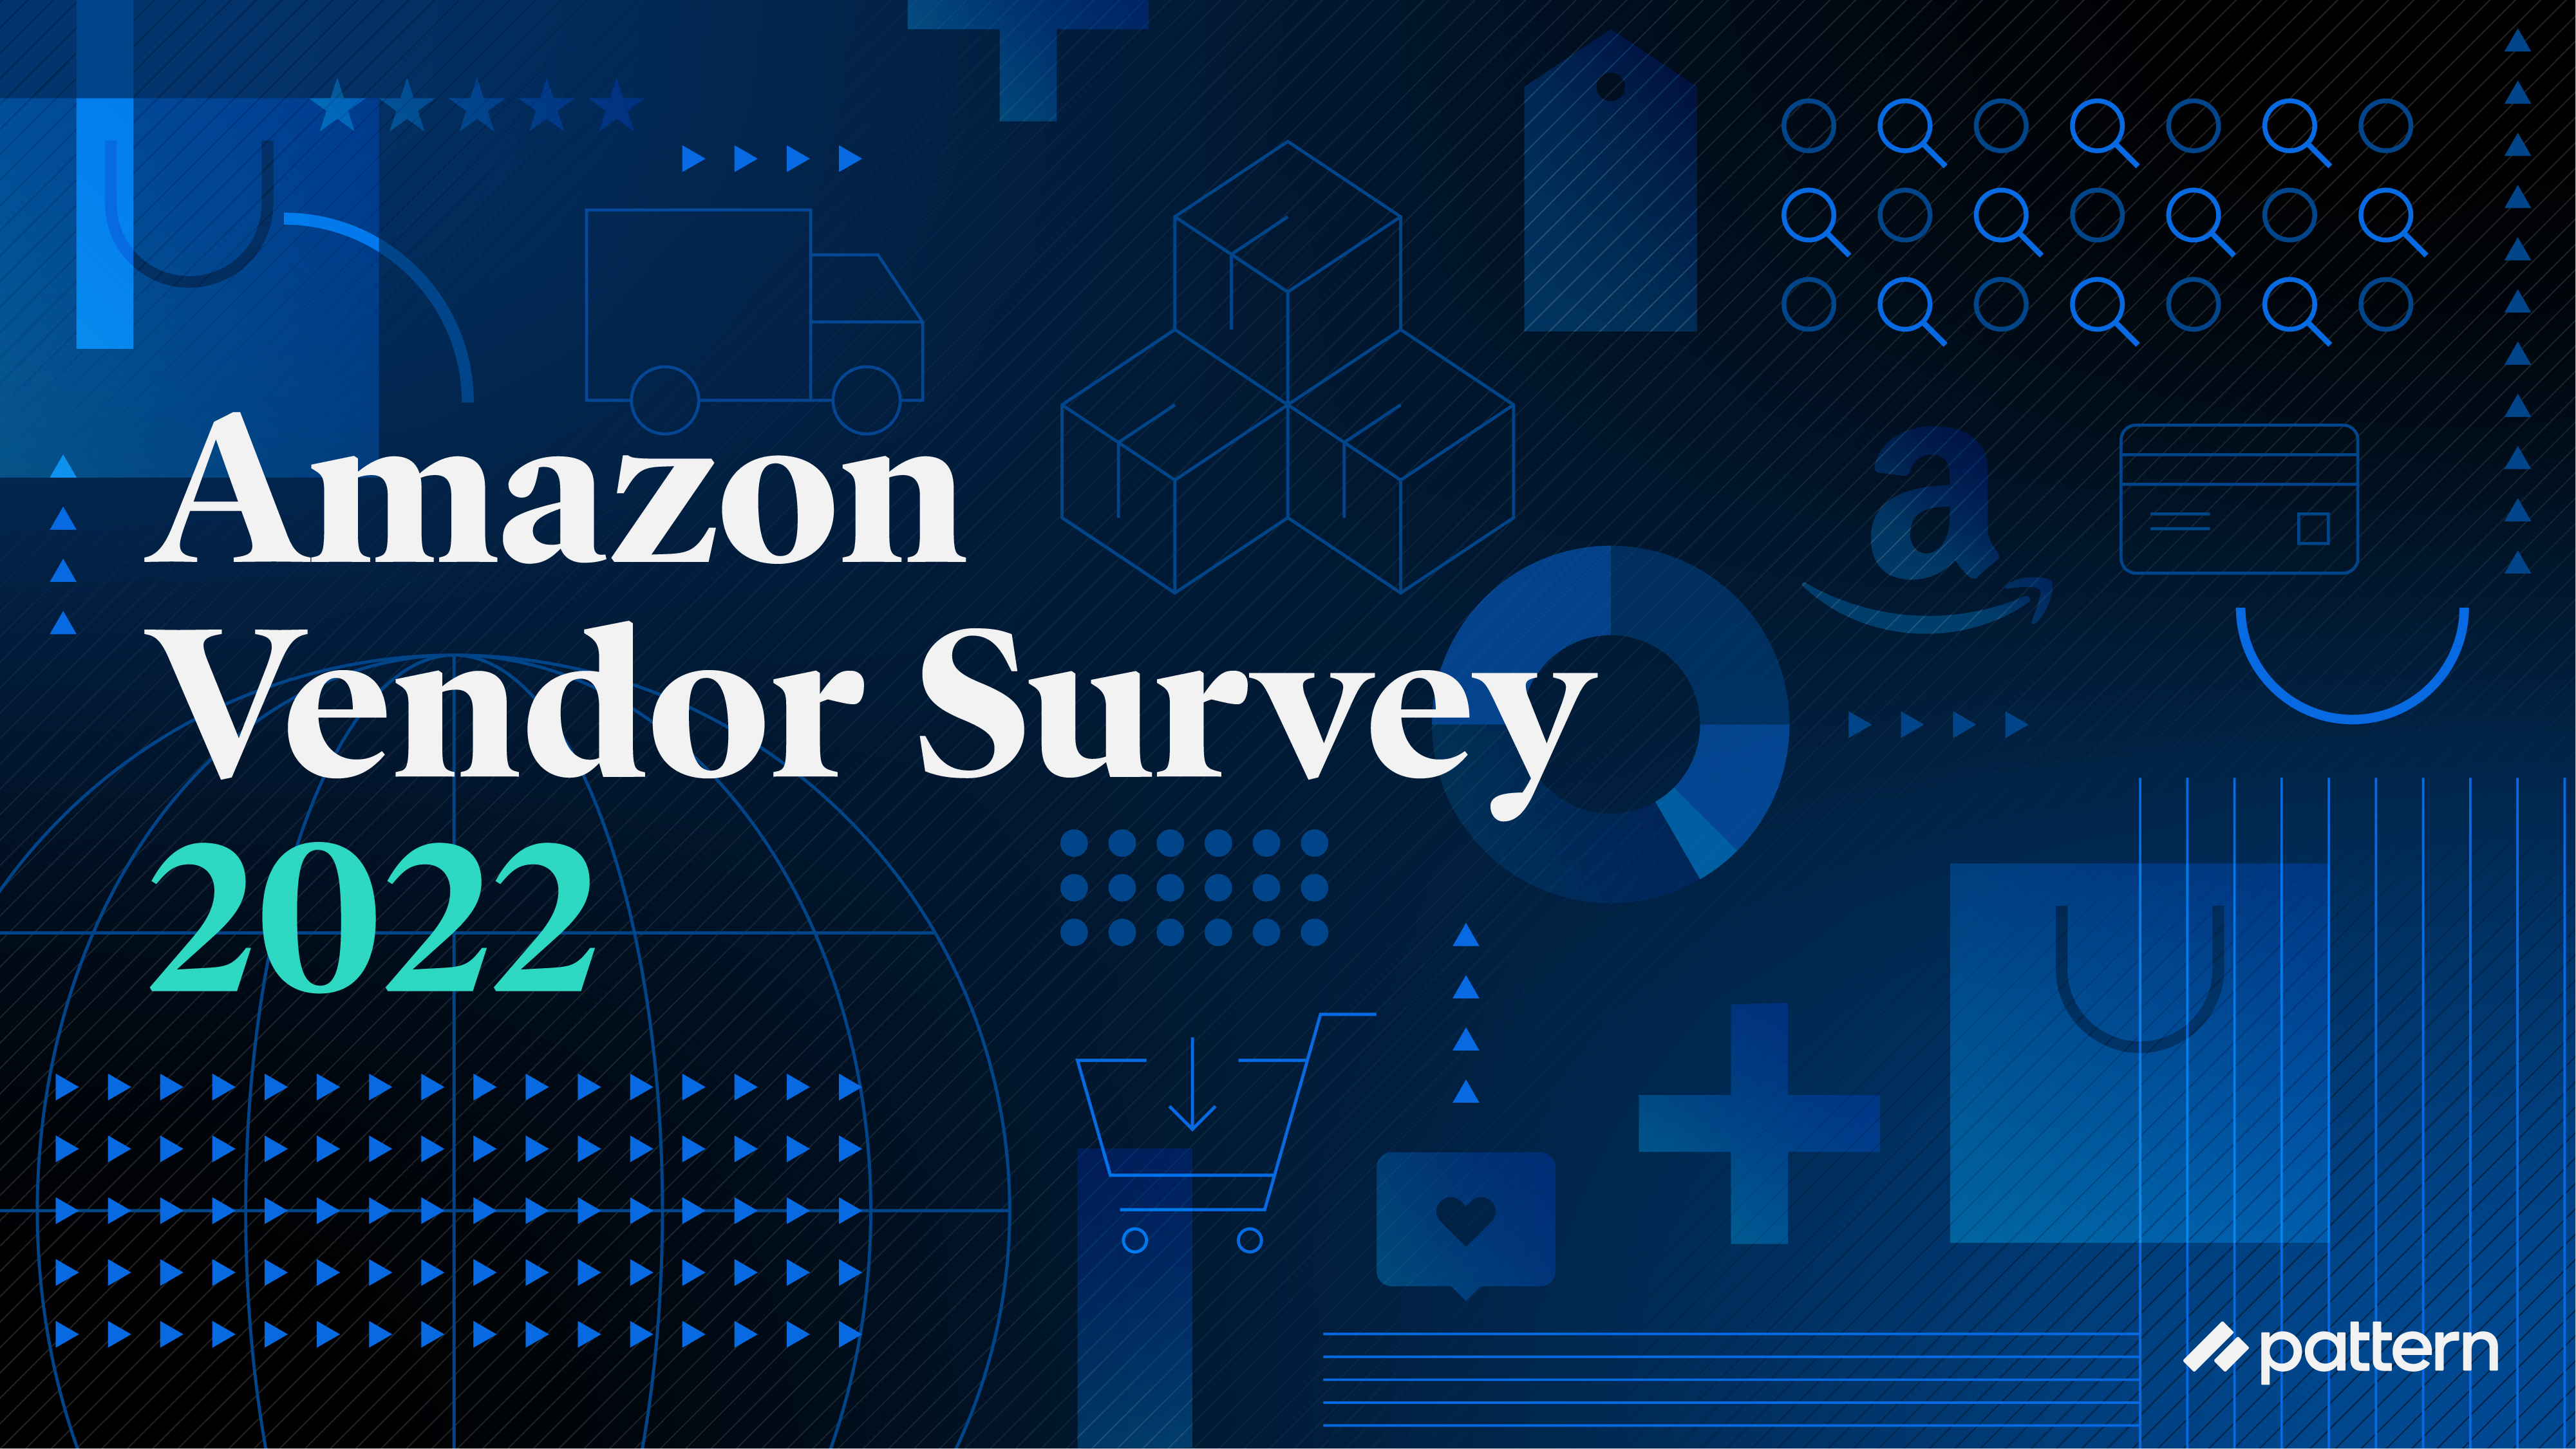 Amazon EMEA Vendor Survey 2022 cover image